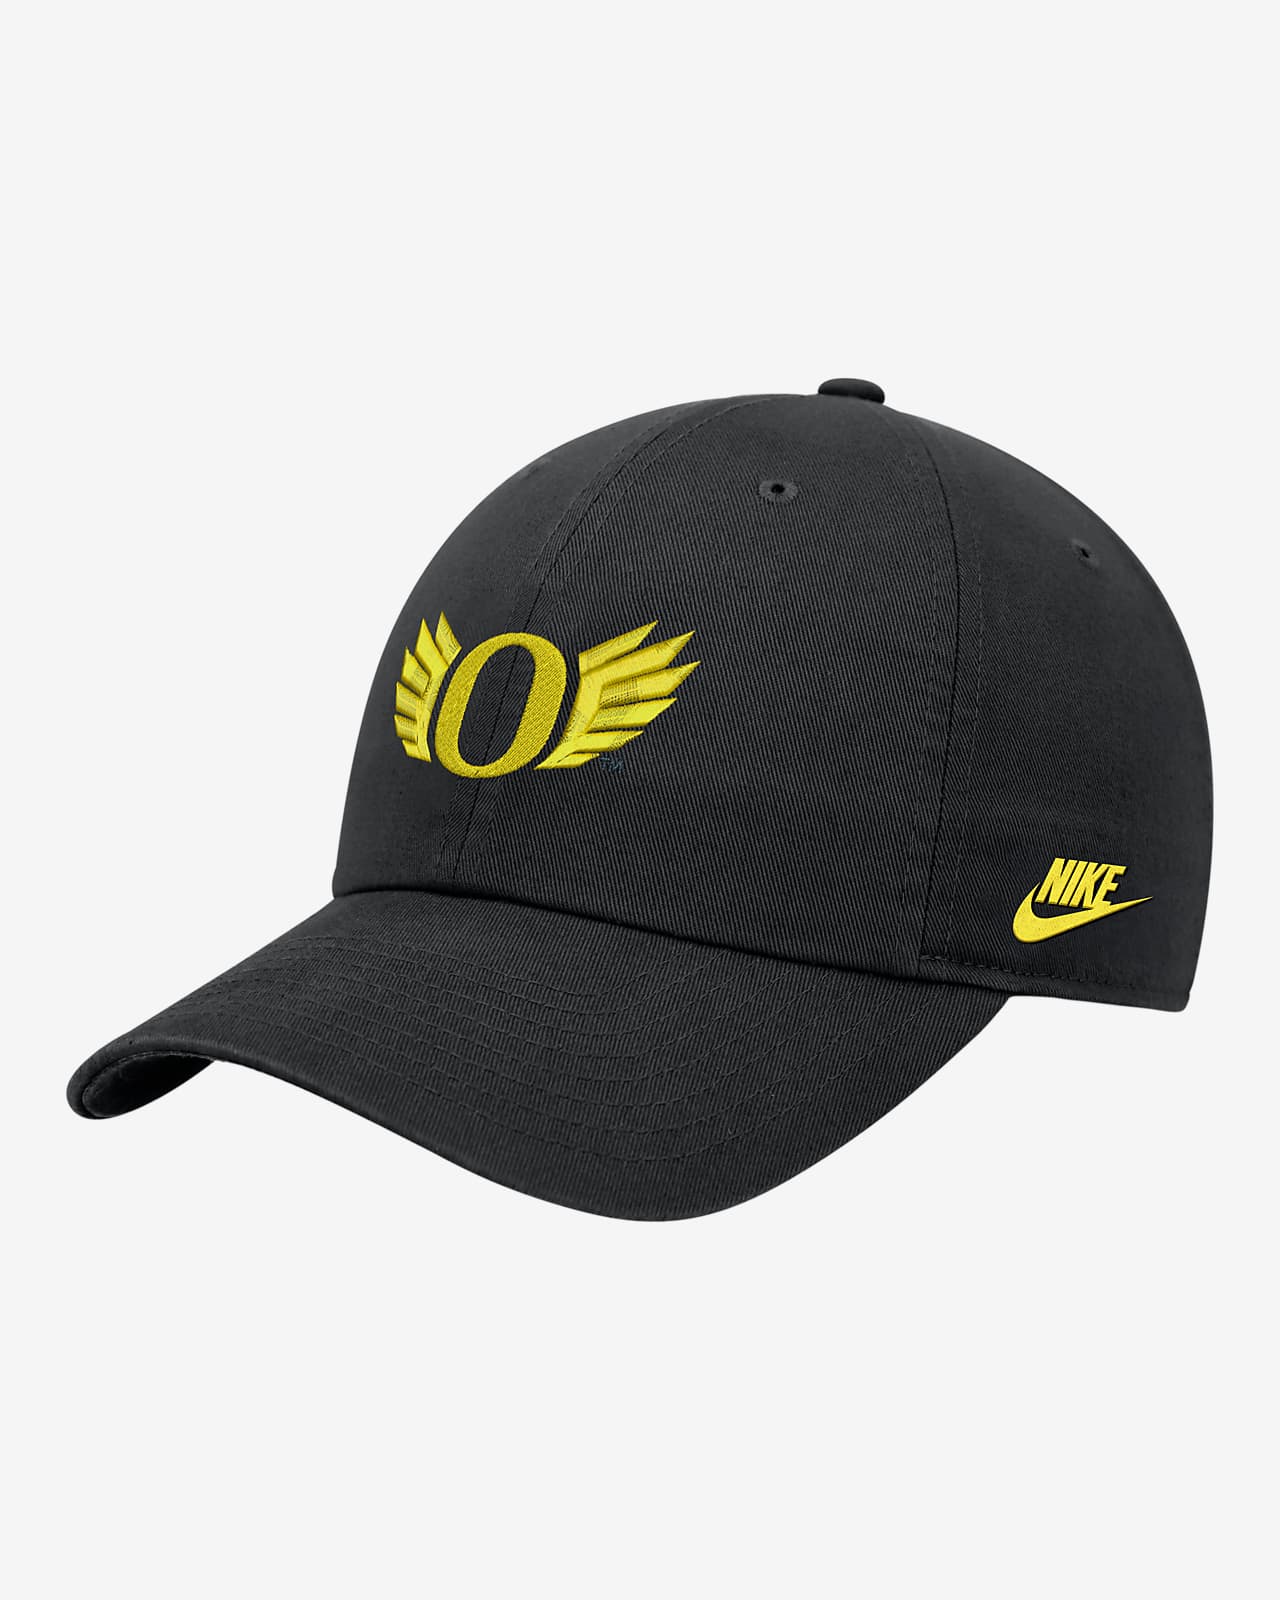 Oregon Nike College Adjustable Cap